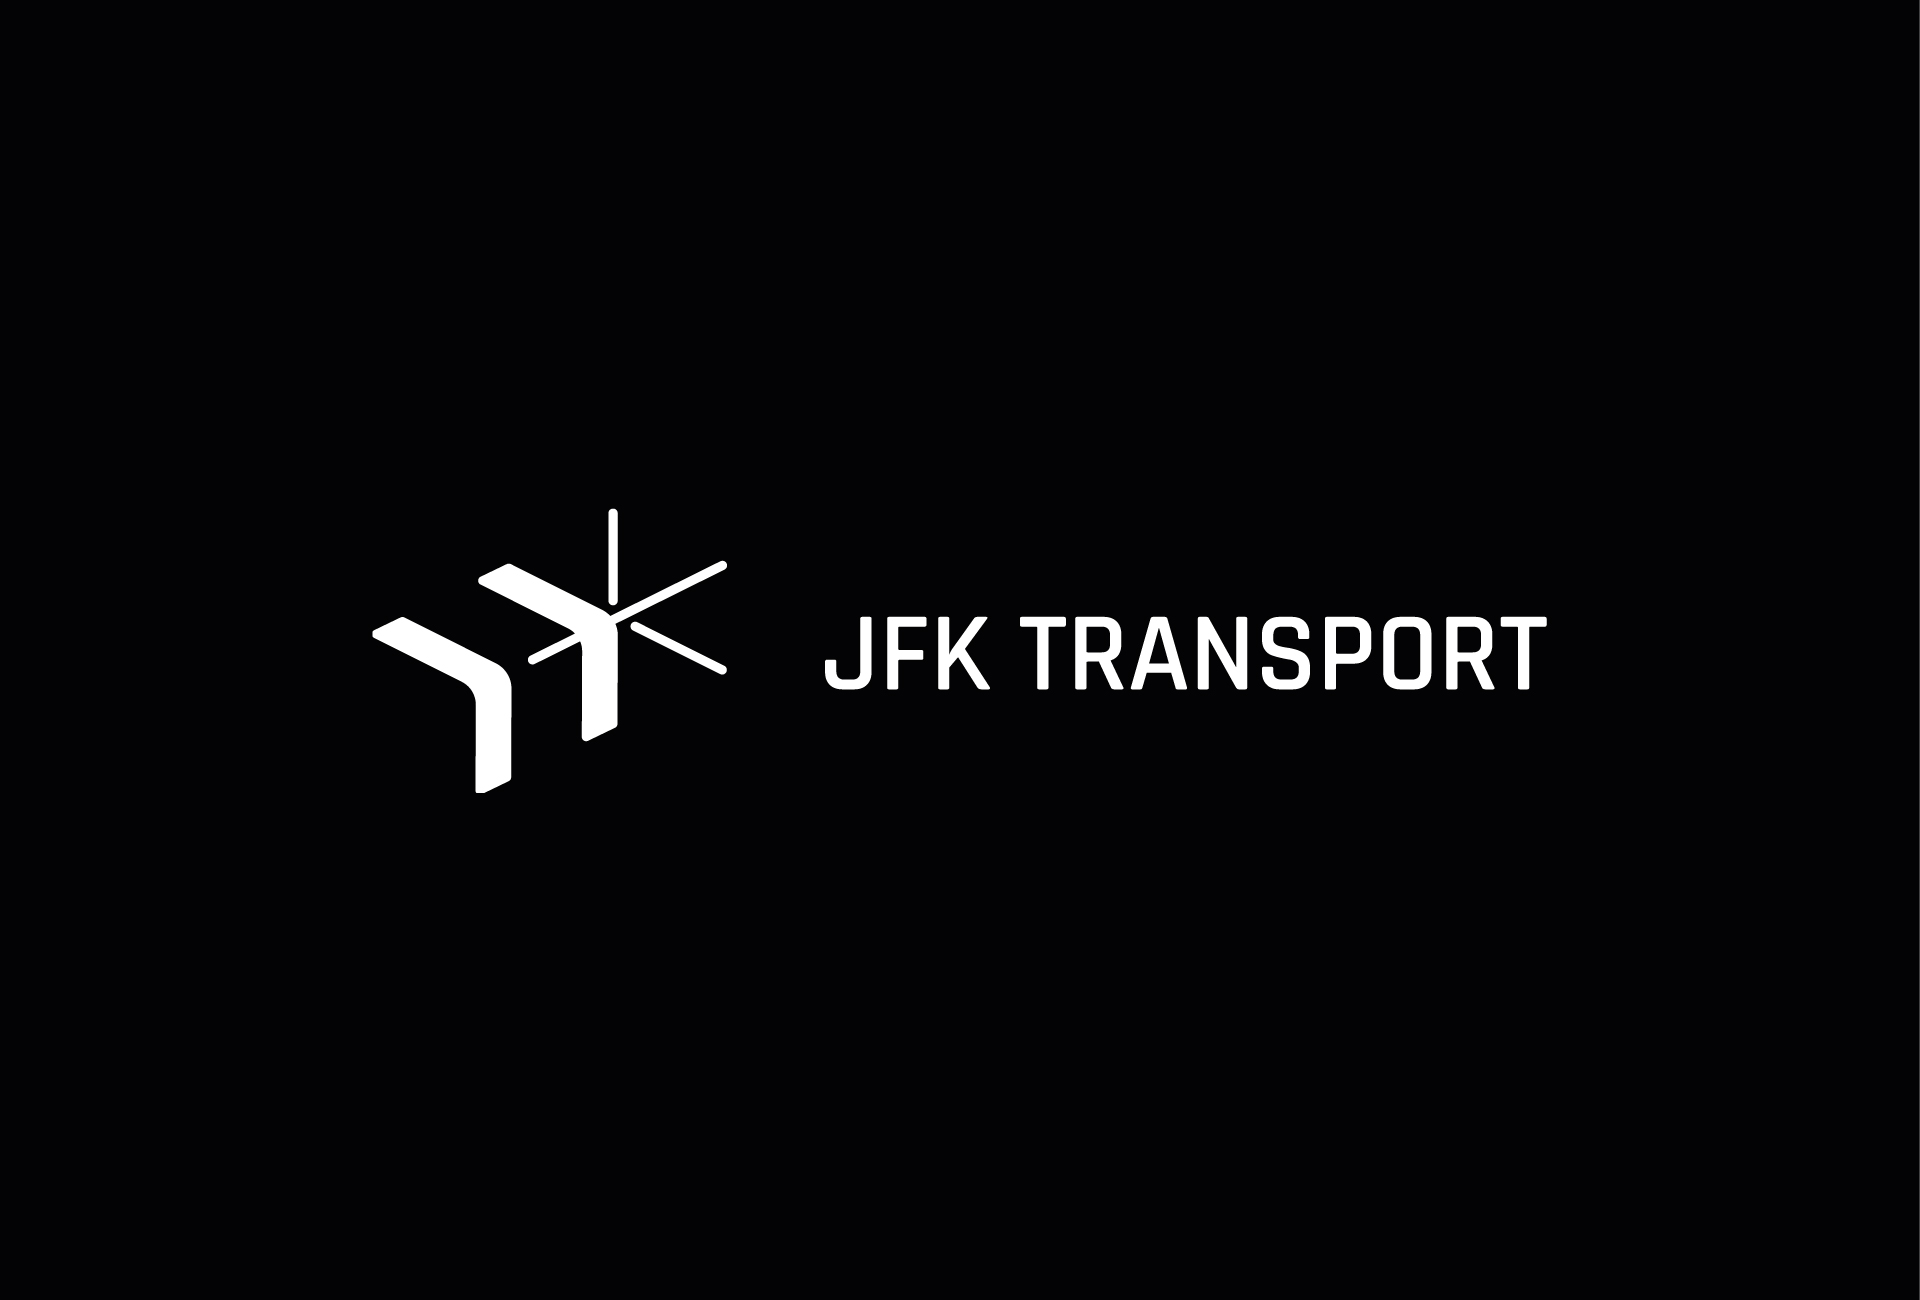 Logo JFK monochrome